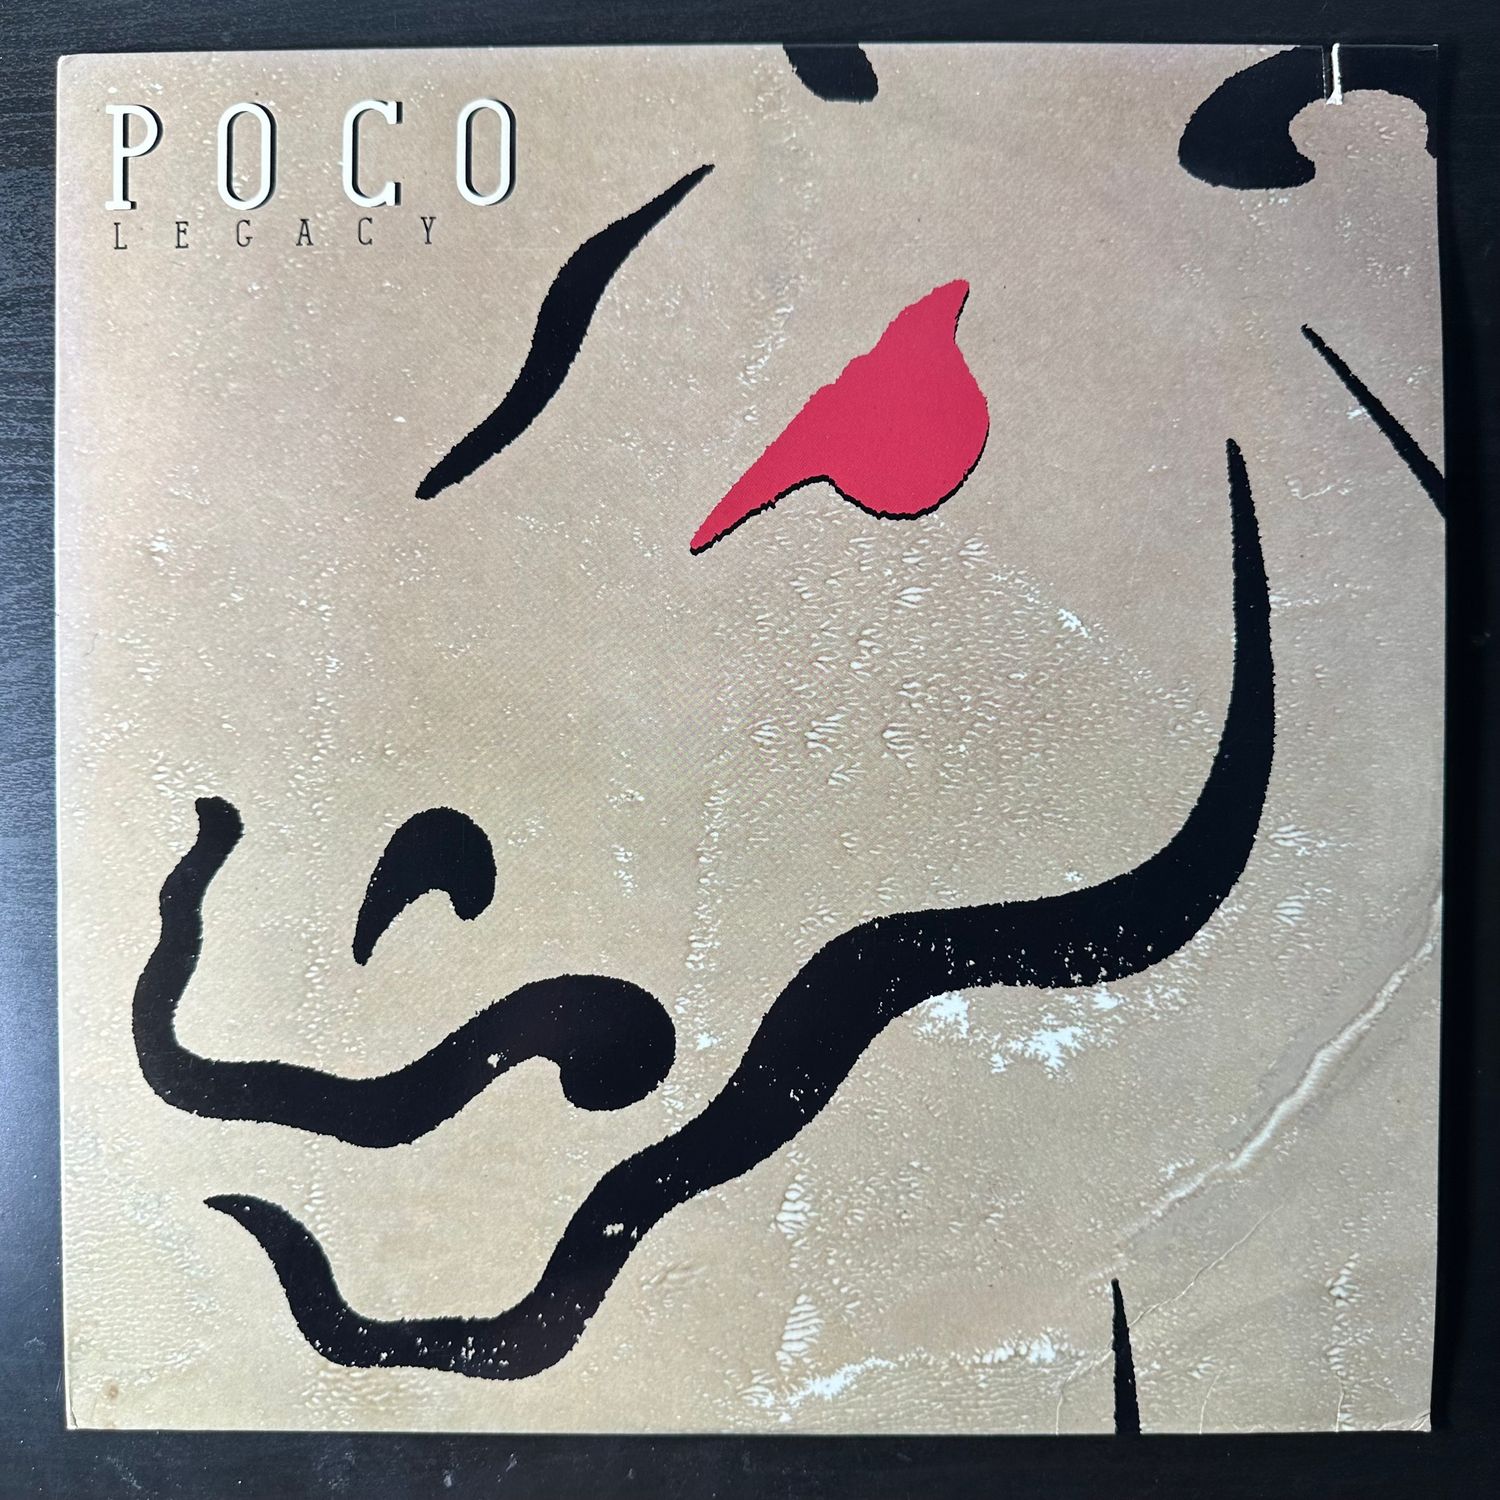 Poco – Legacy (США 1979г.)